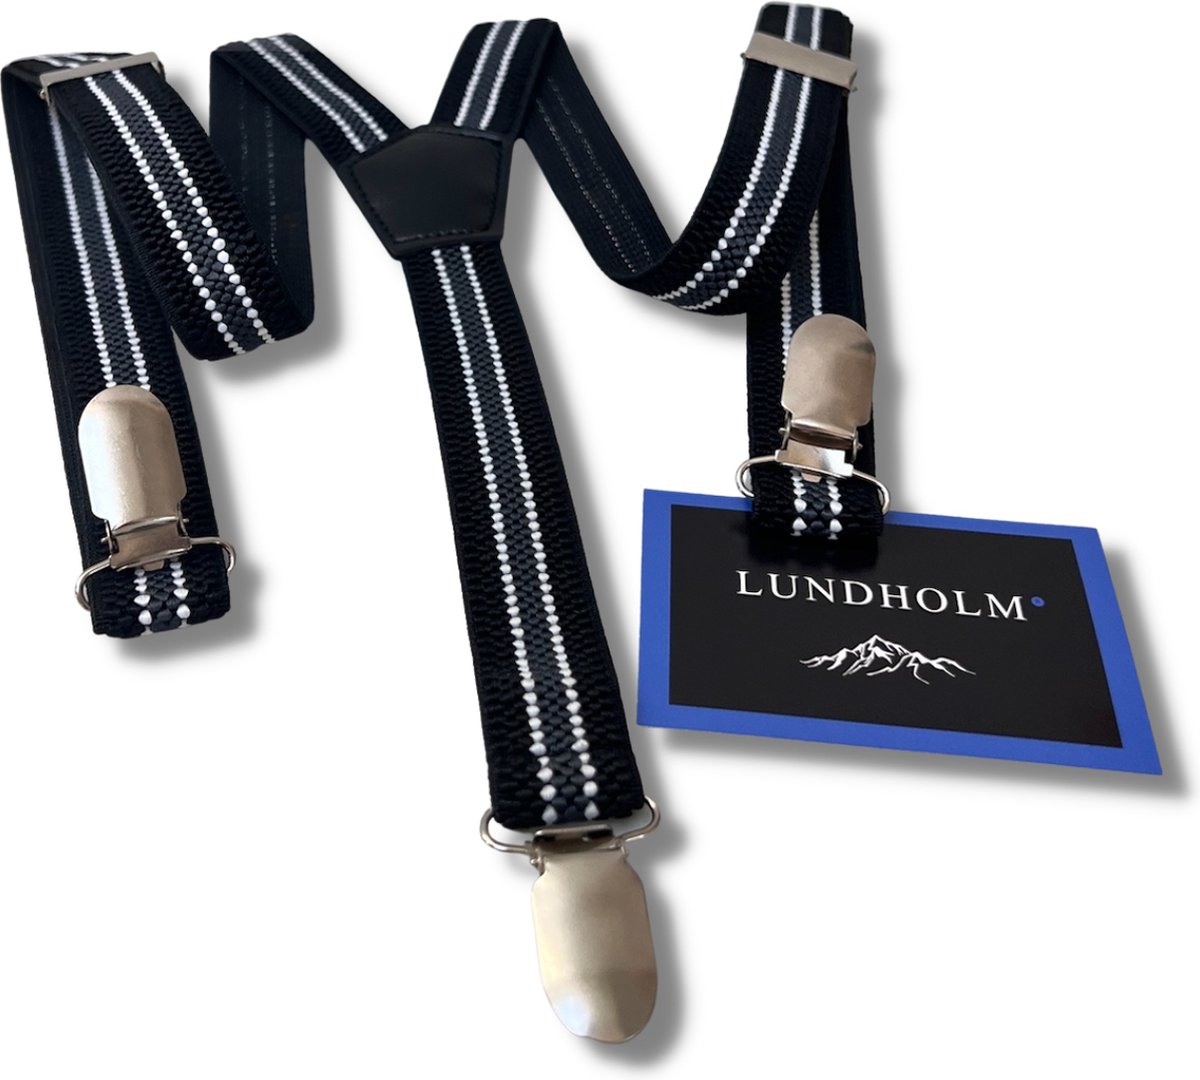 Lundholm Bretels heren volwassenen zwart - hoge kwaliteit en stevige clip - Scandinavisch design | Lundholm Ystad serie